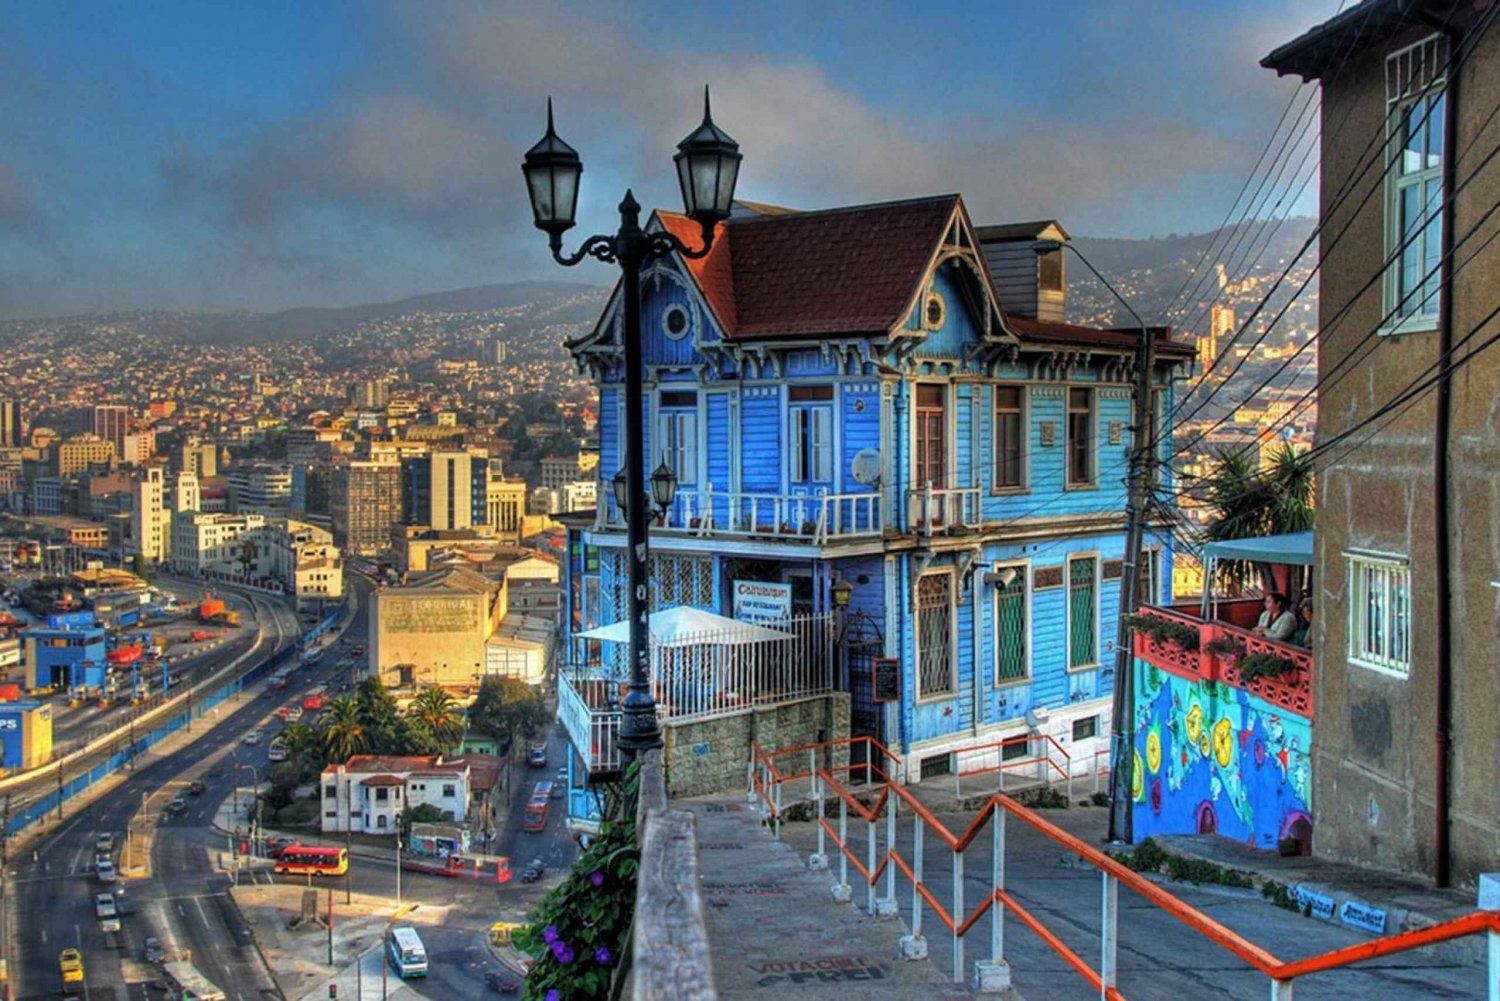 Santiago: Private Full-Day Valparaiso and Viña del Mar Tour